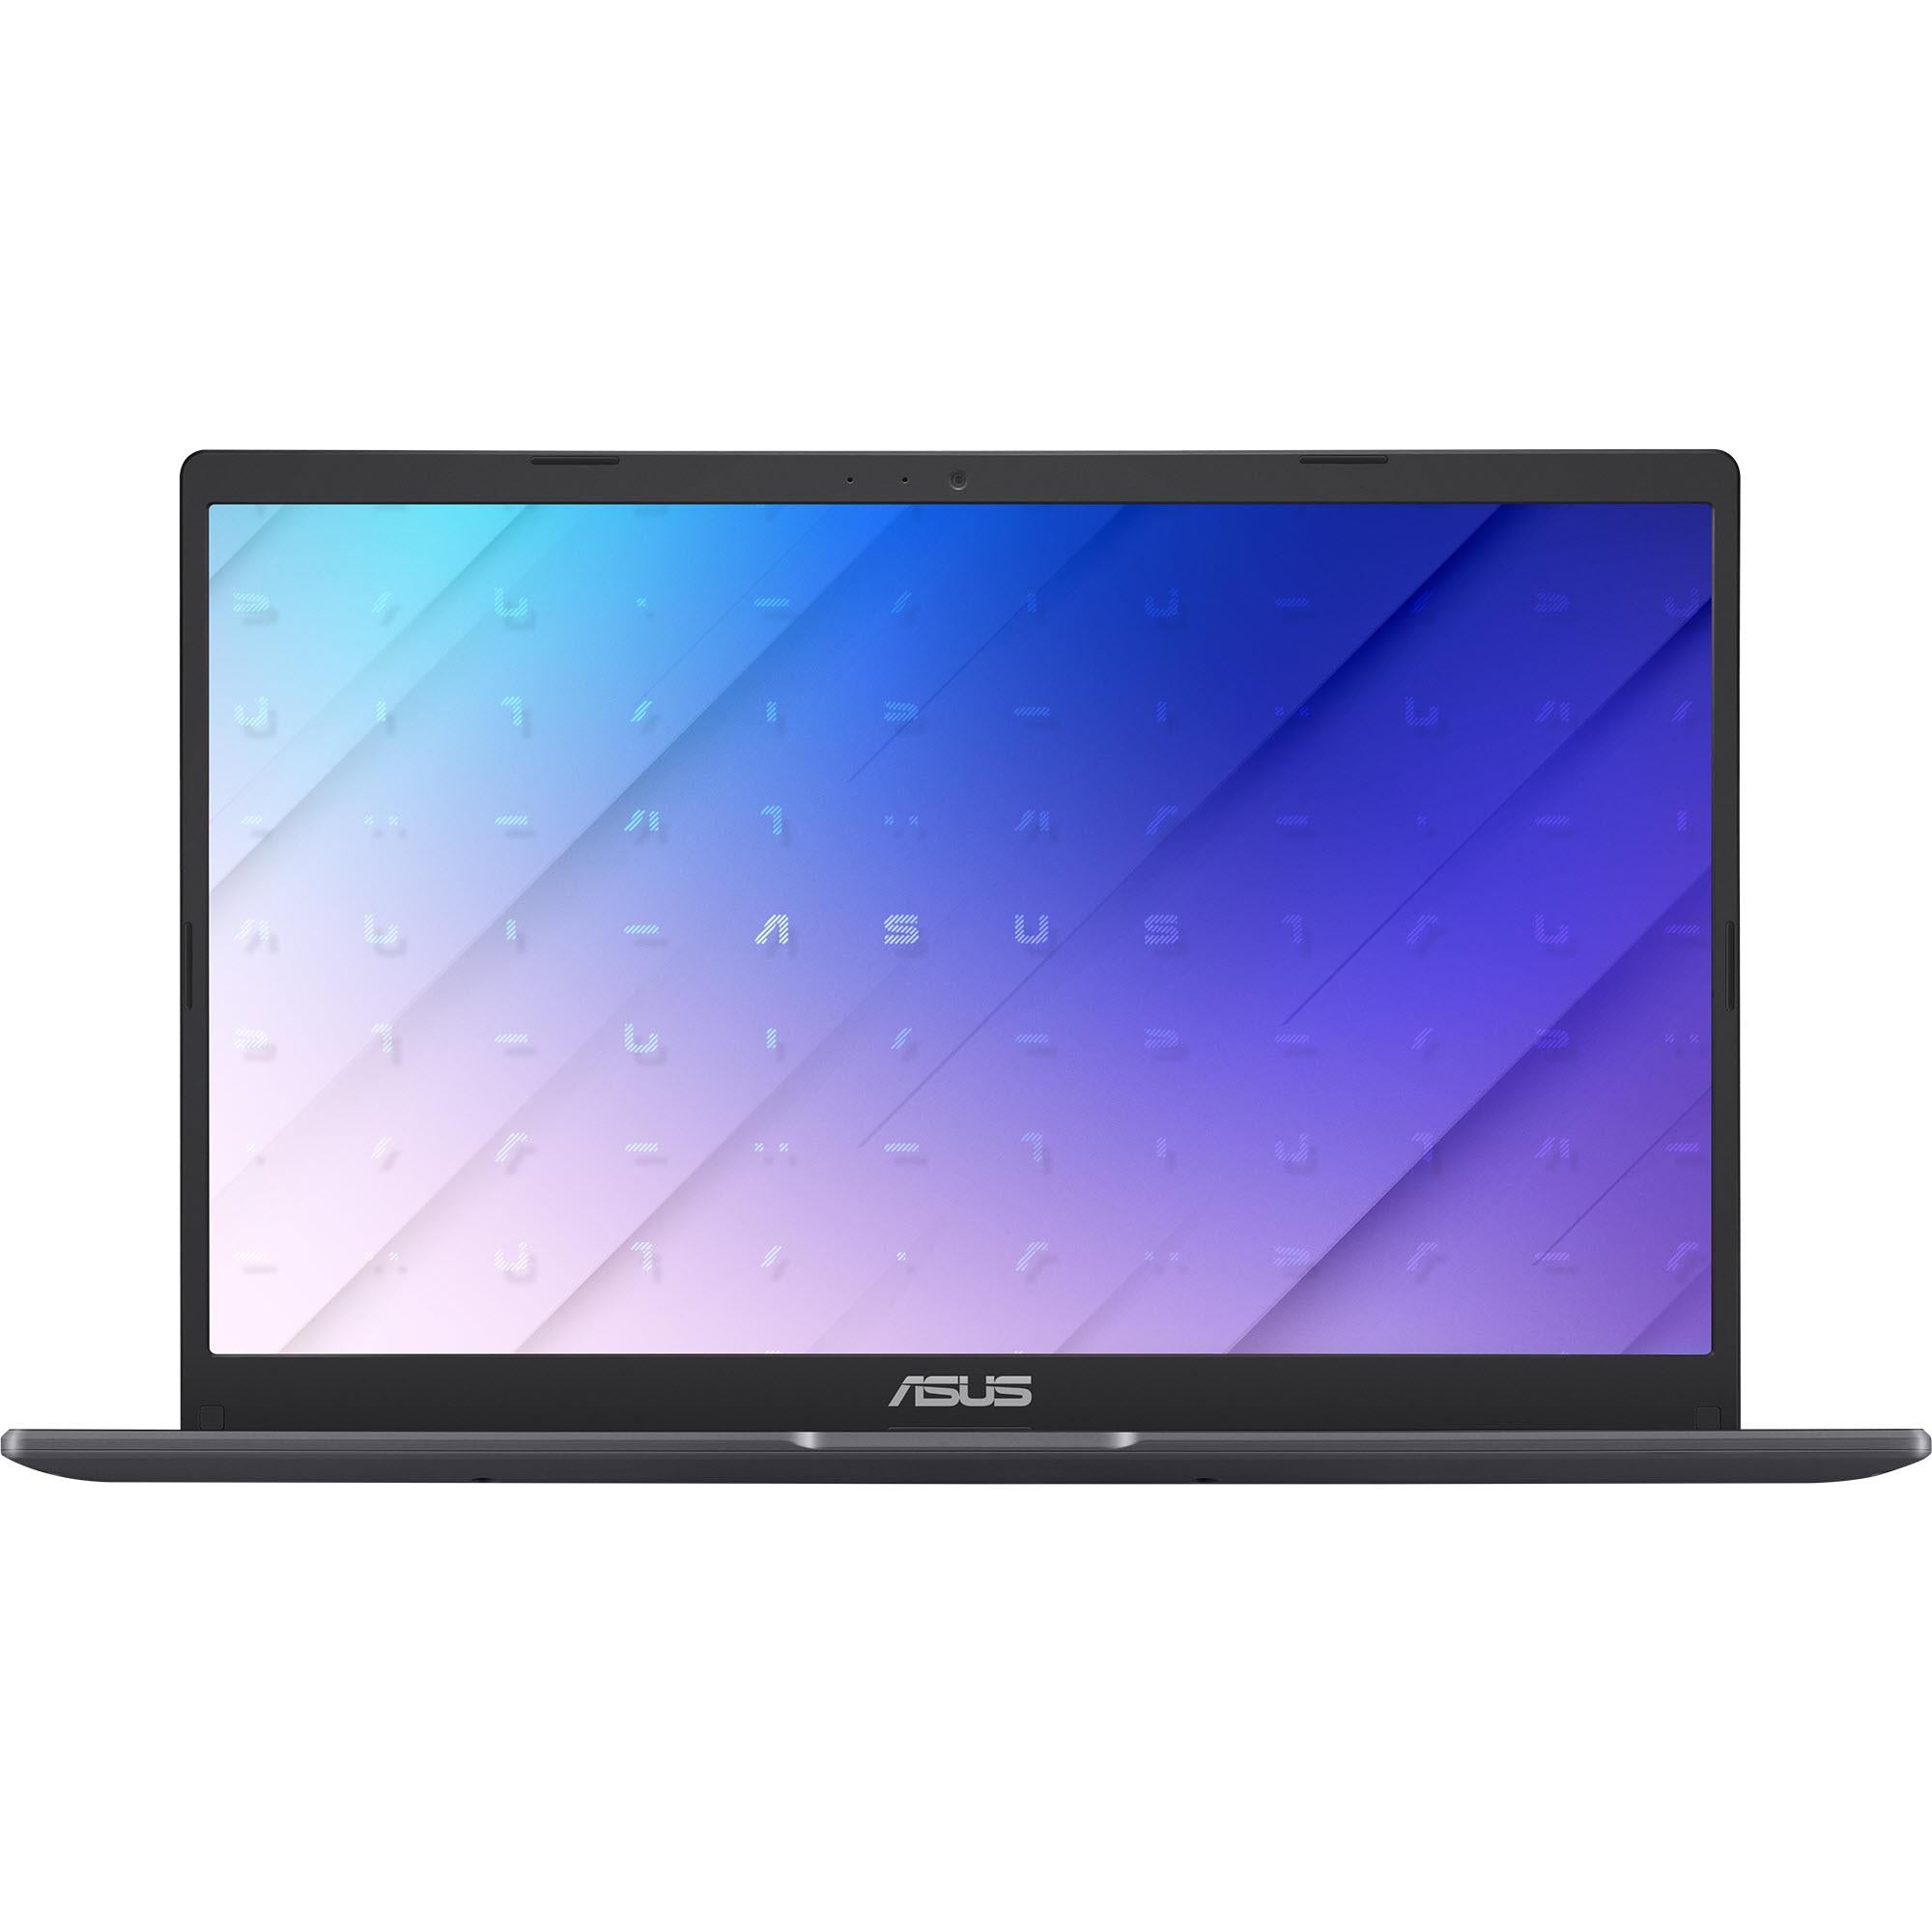 Portátil Asus Vivobook X512fa Br1509t Intel Core I3